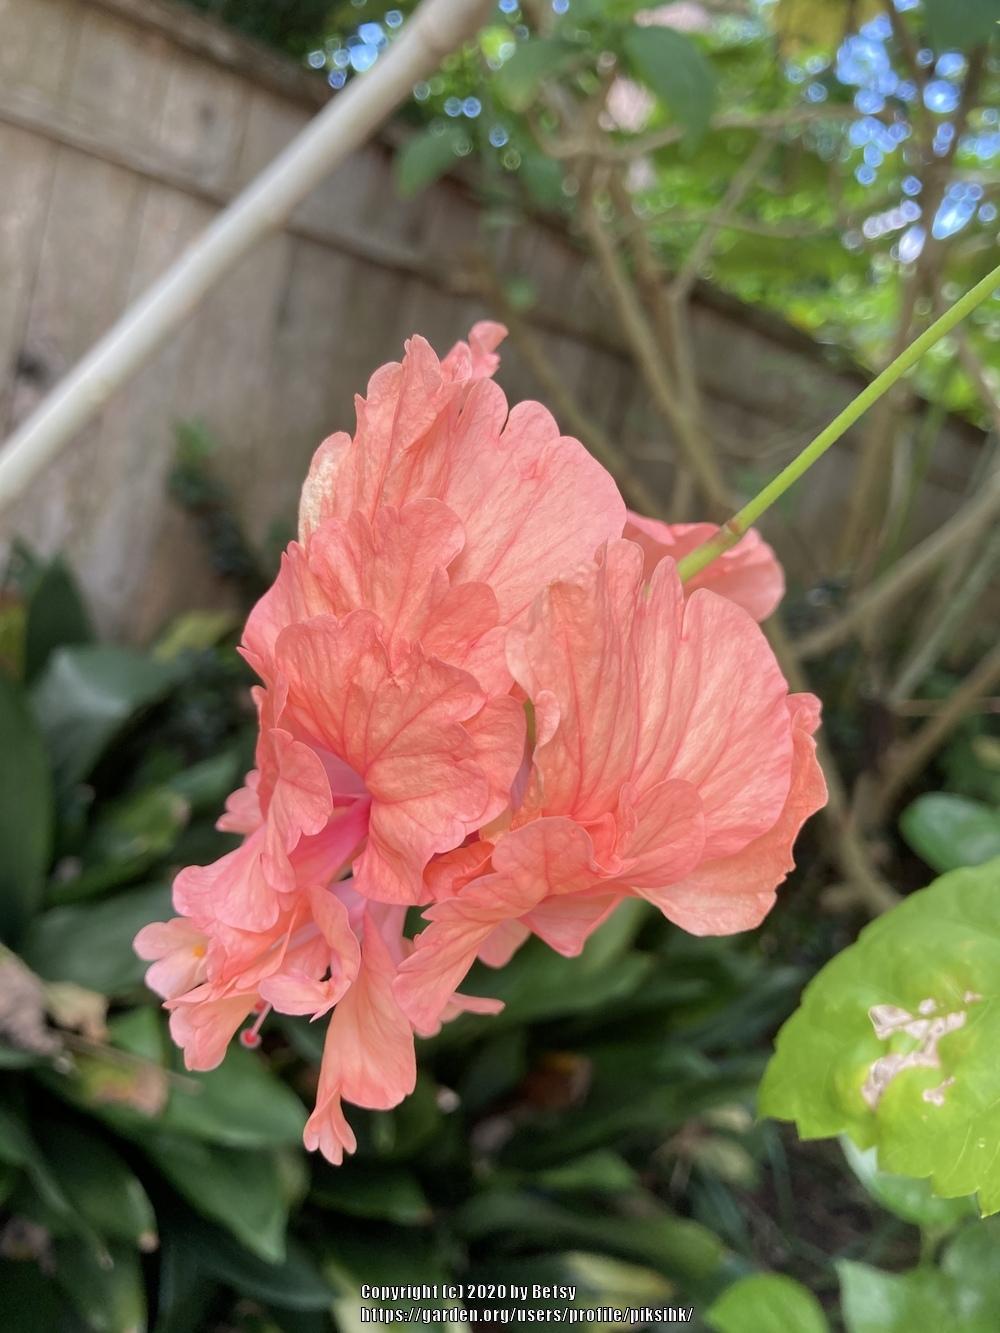 Photo of Tropical Hibiscus (Hibiscus rosa-sinensis 'El Capitolio Sport') uploaded by piksihk